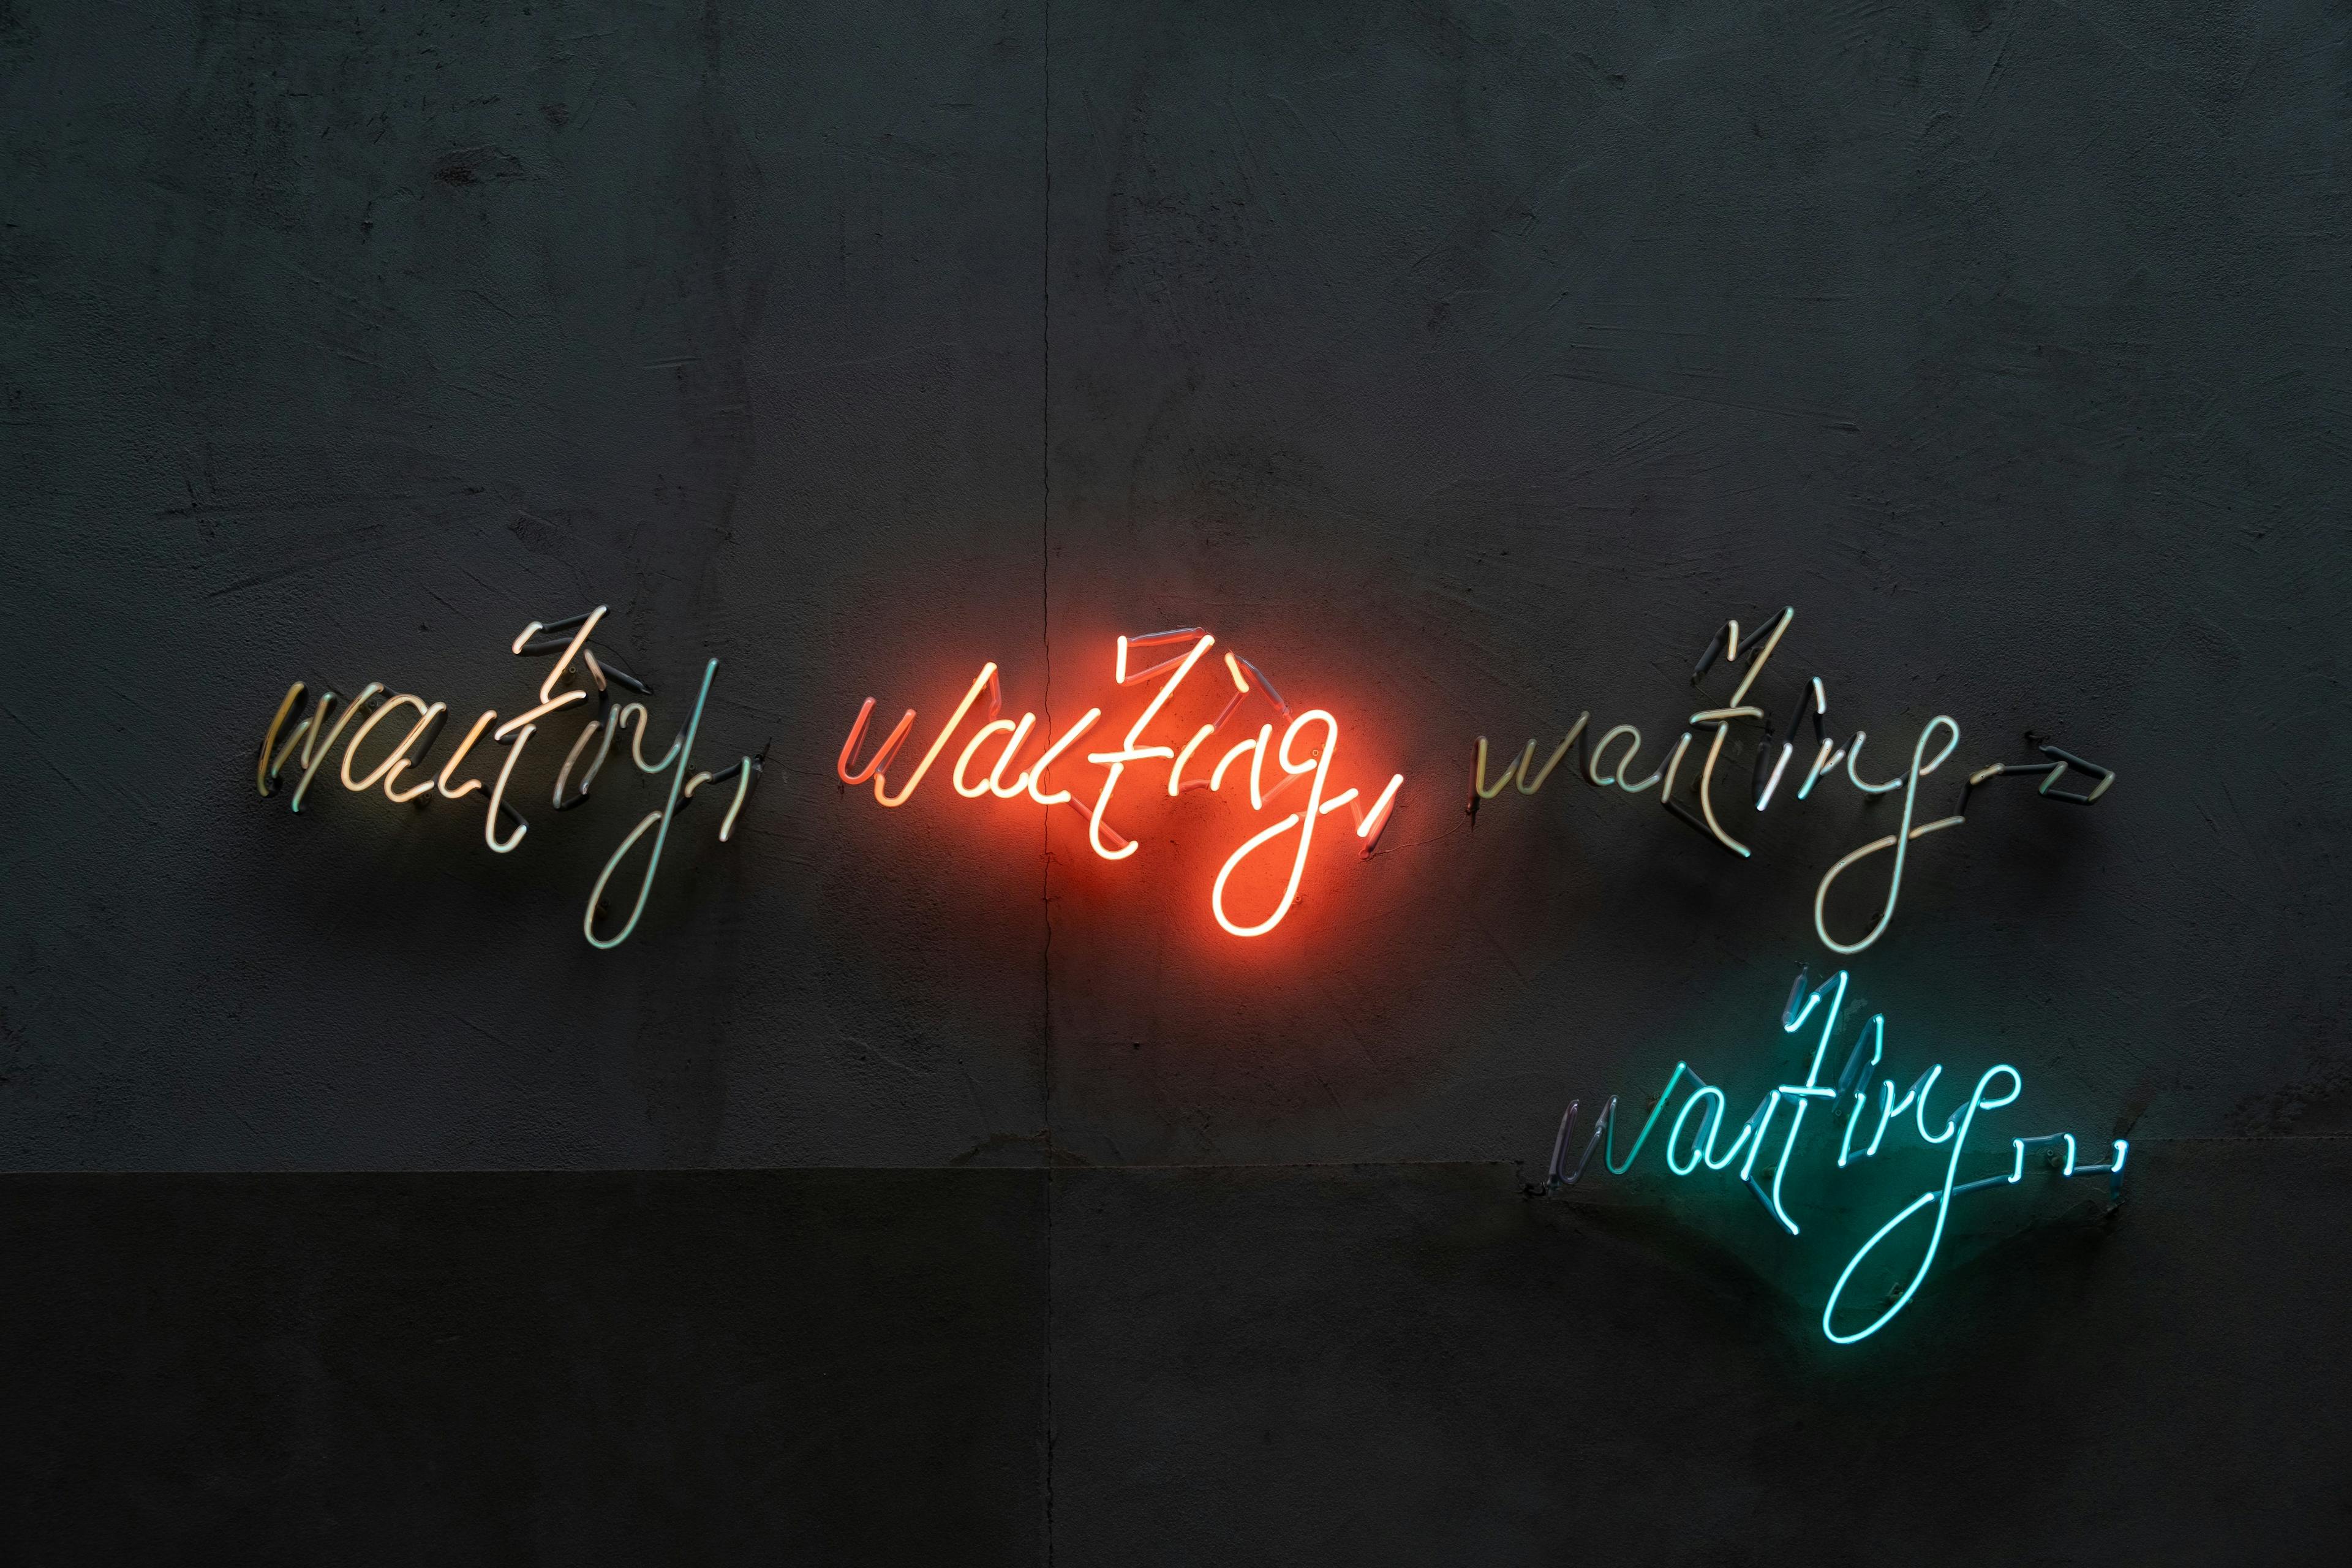 Neon signs that read "waiting, waiting, waiting, waiting..."